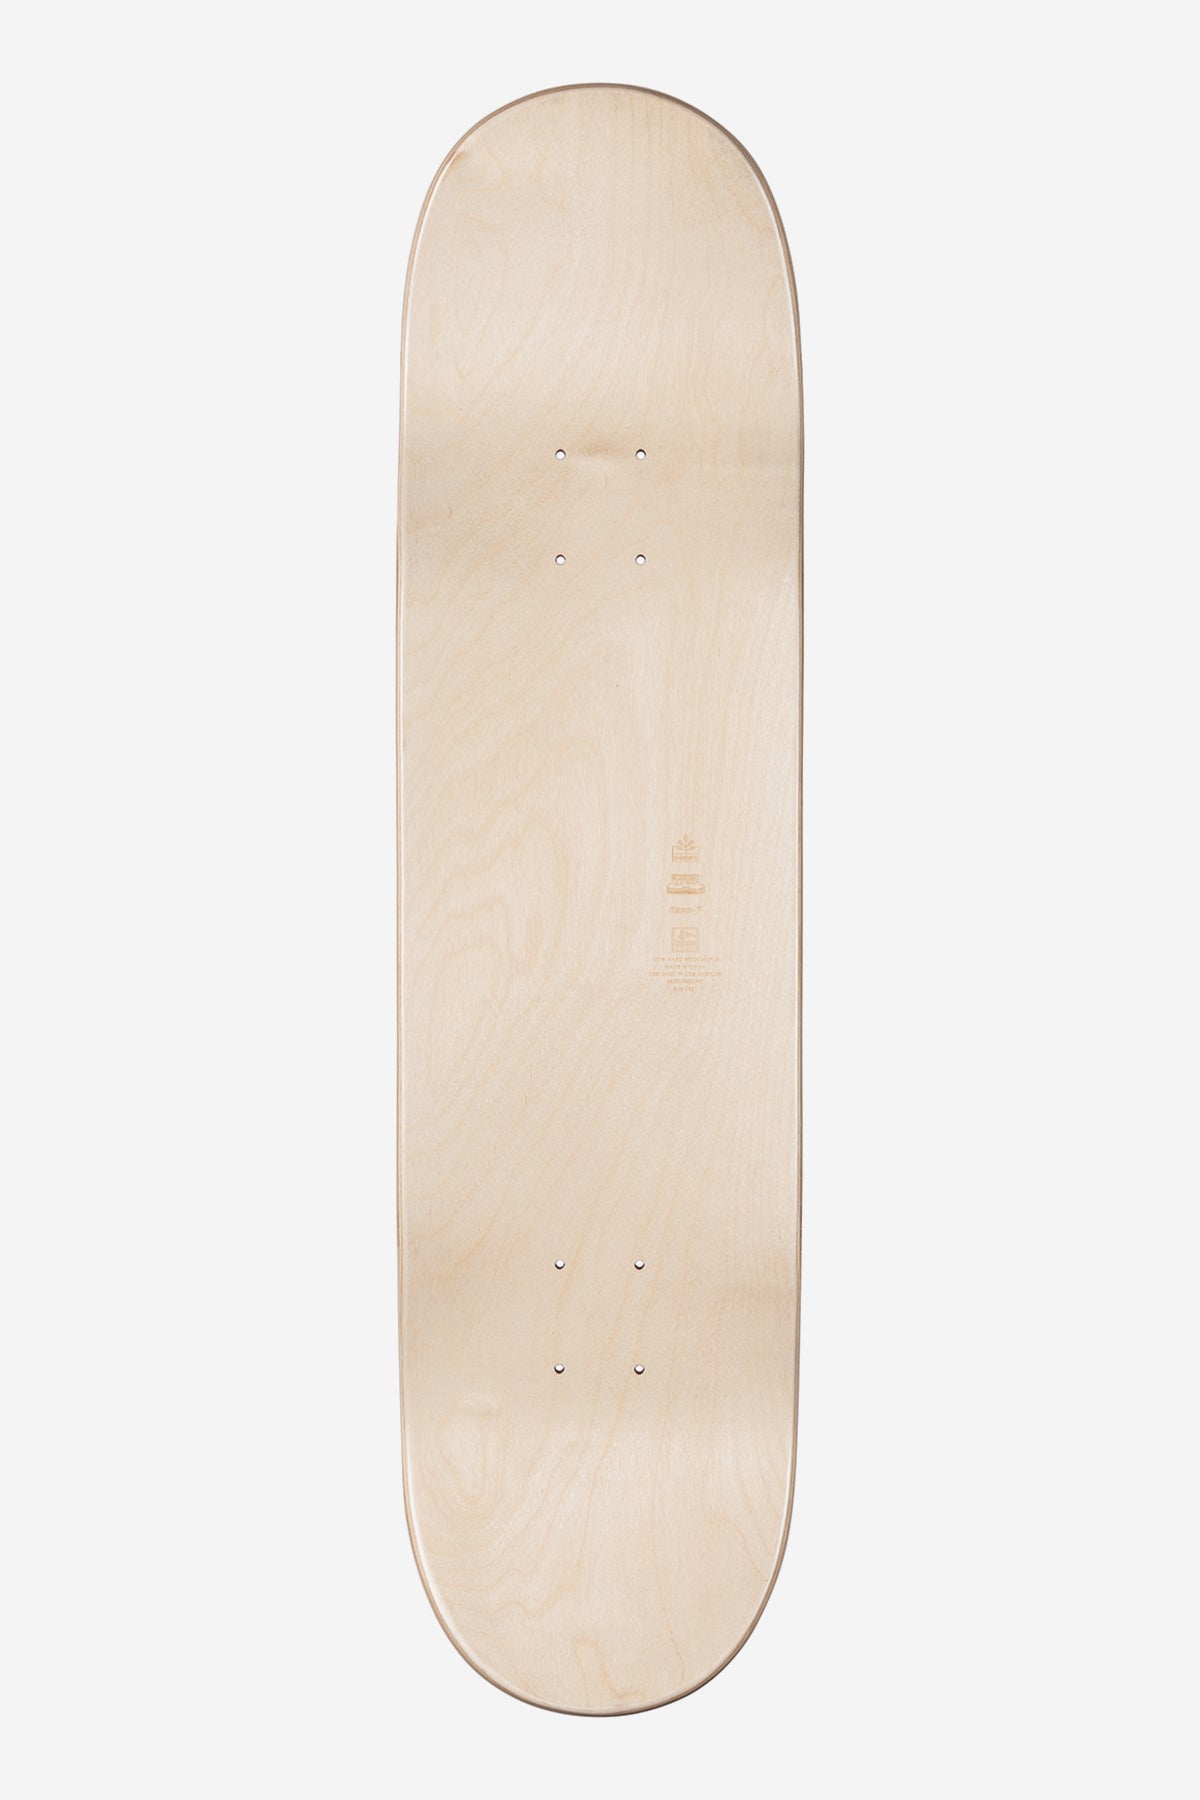 Globe - Goodstock - Sahara - 8.375" Skateboard Deck